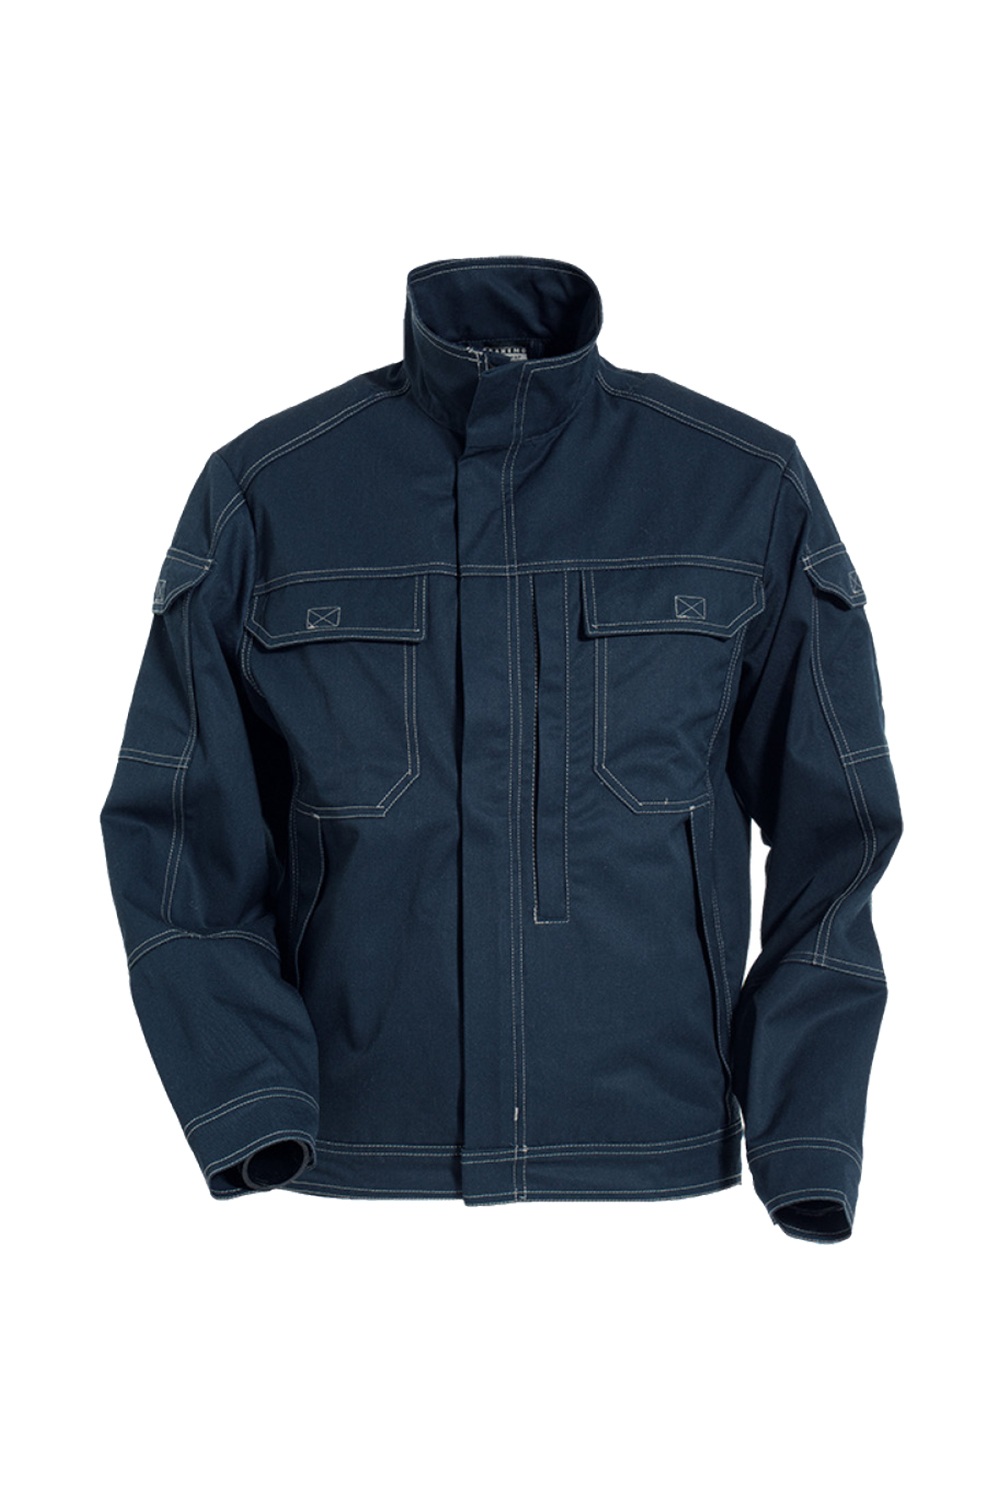 Cantex 54 FR Jacket 5419 88 / Tranemo / Workwear